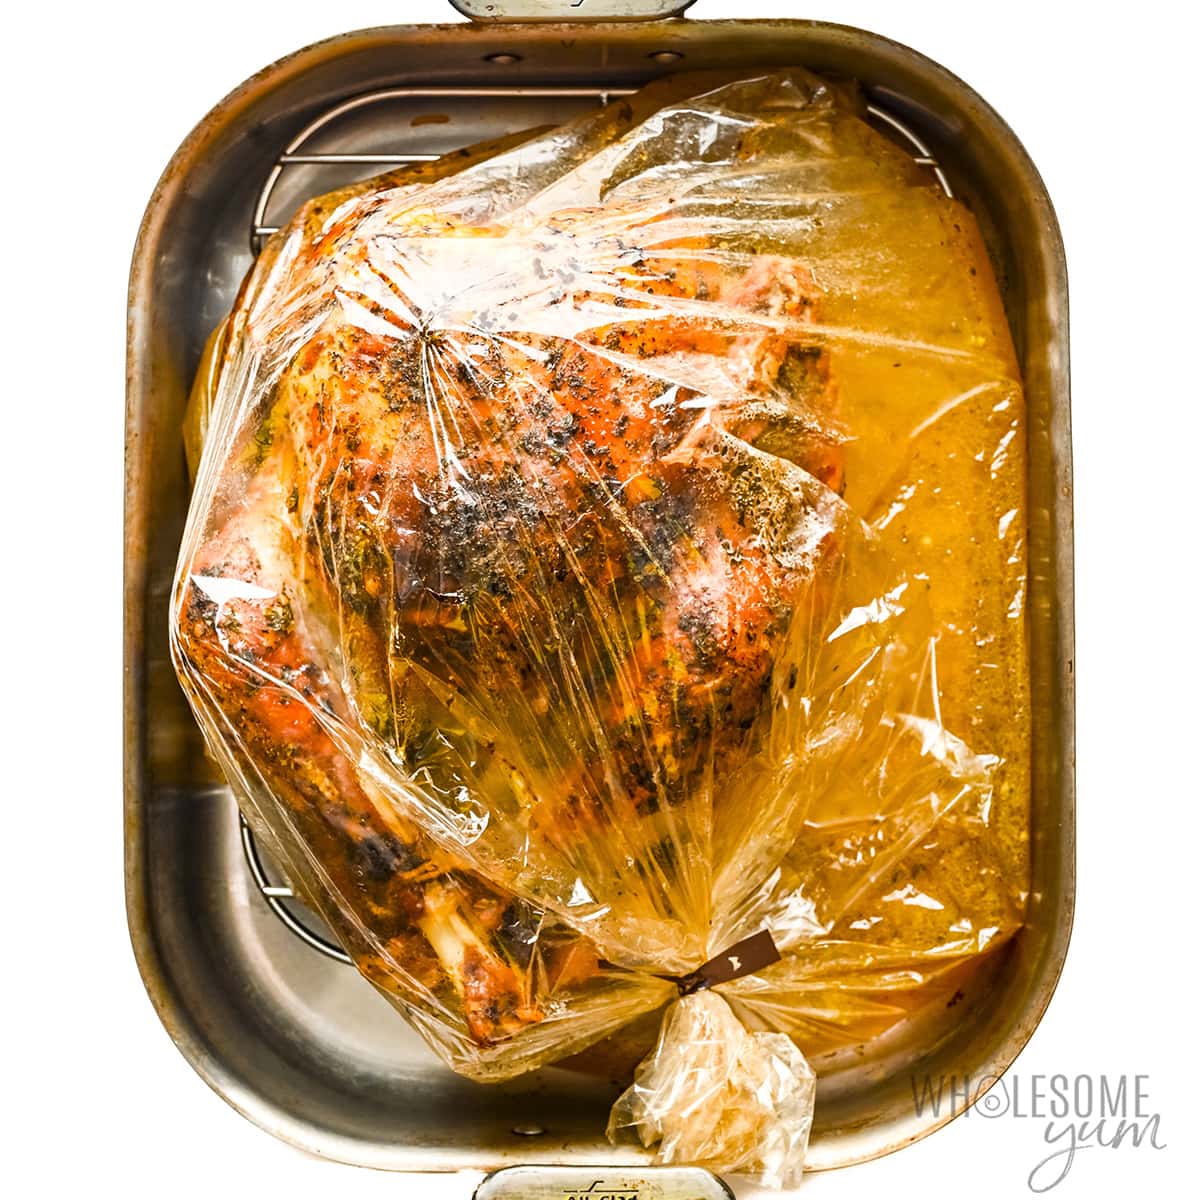 Roasted turkey in a bag.